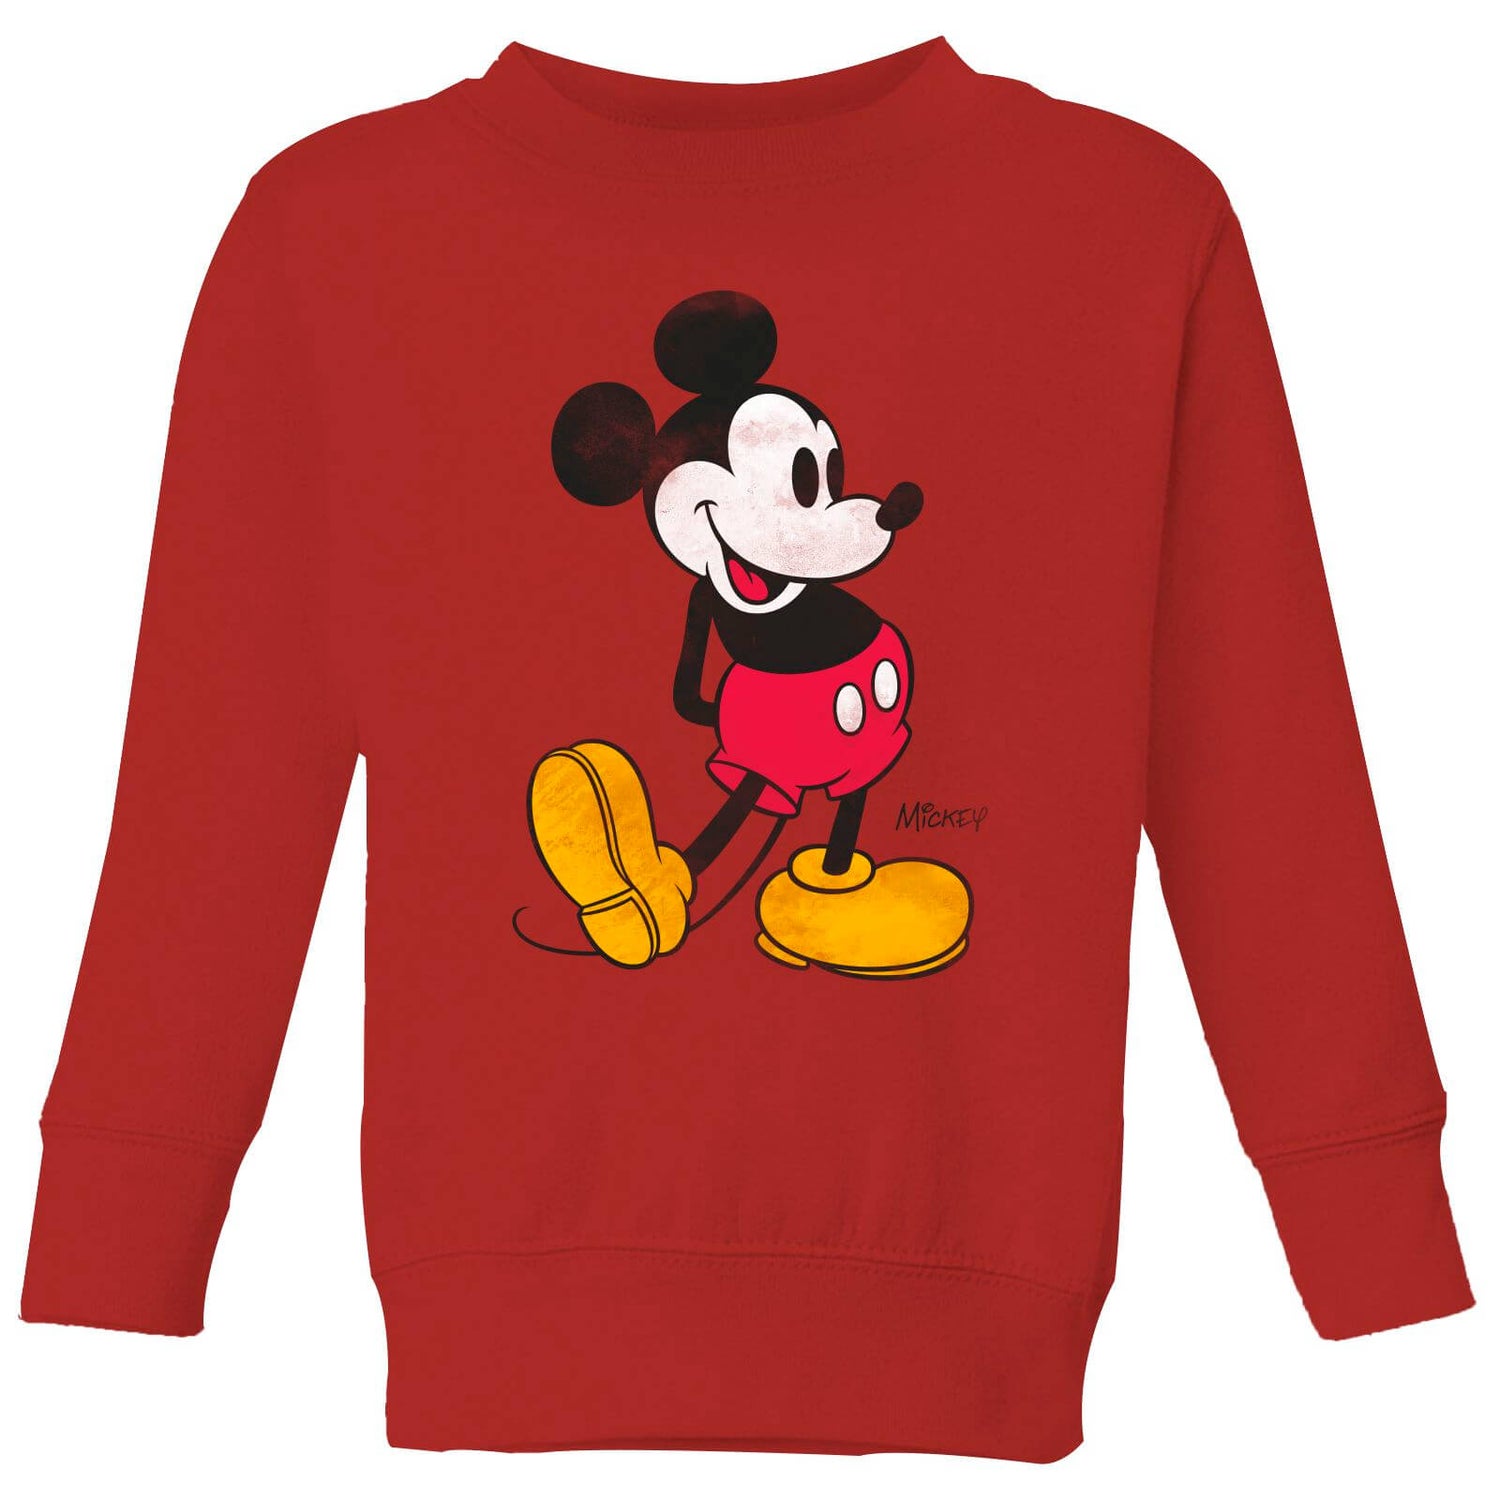 Disney Mickey Mouse Classic Kick Kids' Sweatshirt - Red